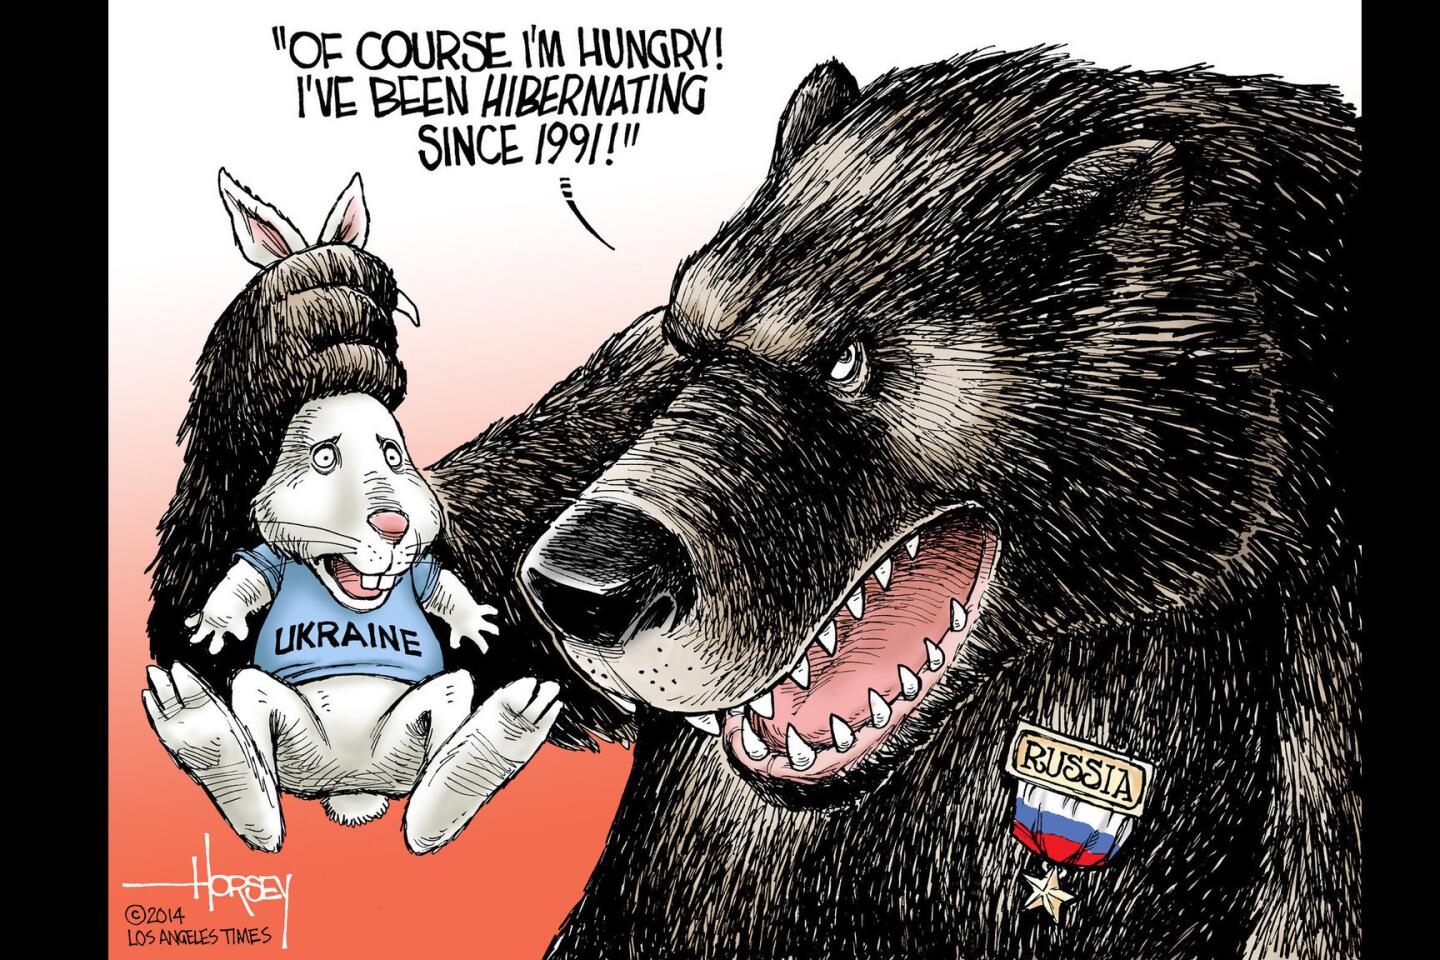 Putin's Ukraine incursion brings back the bad old bear